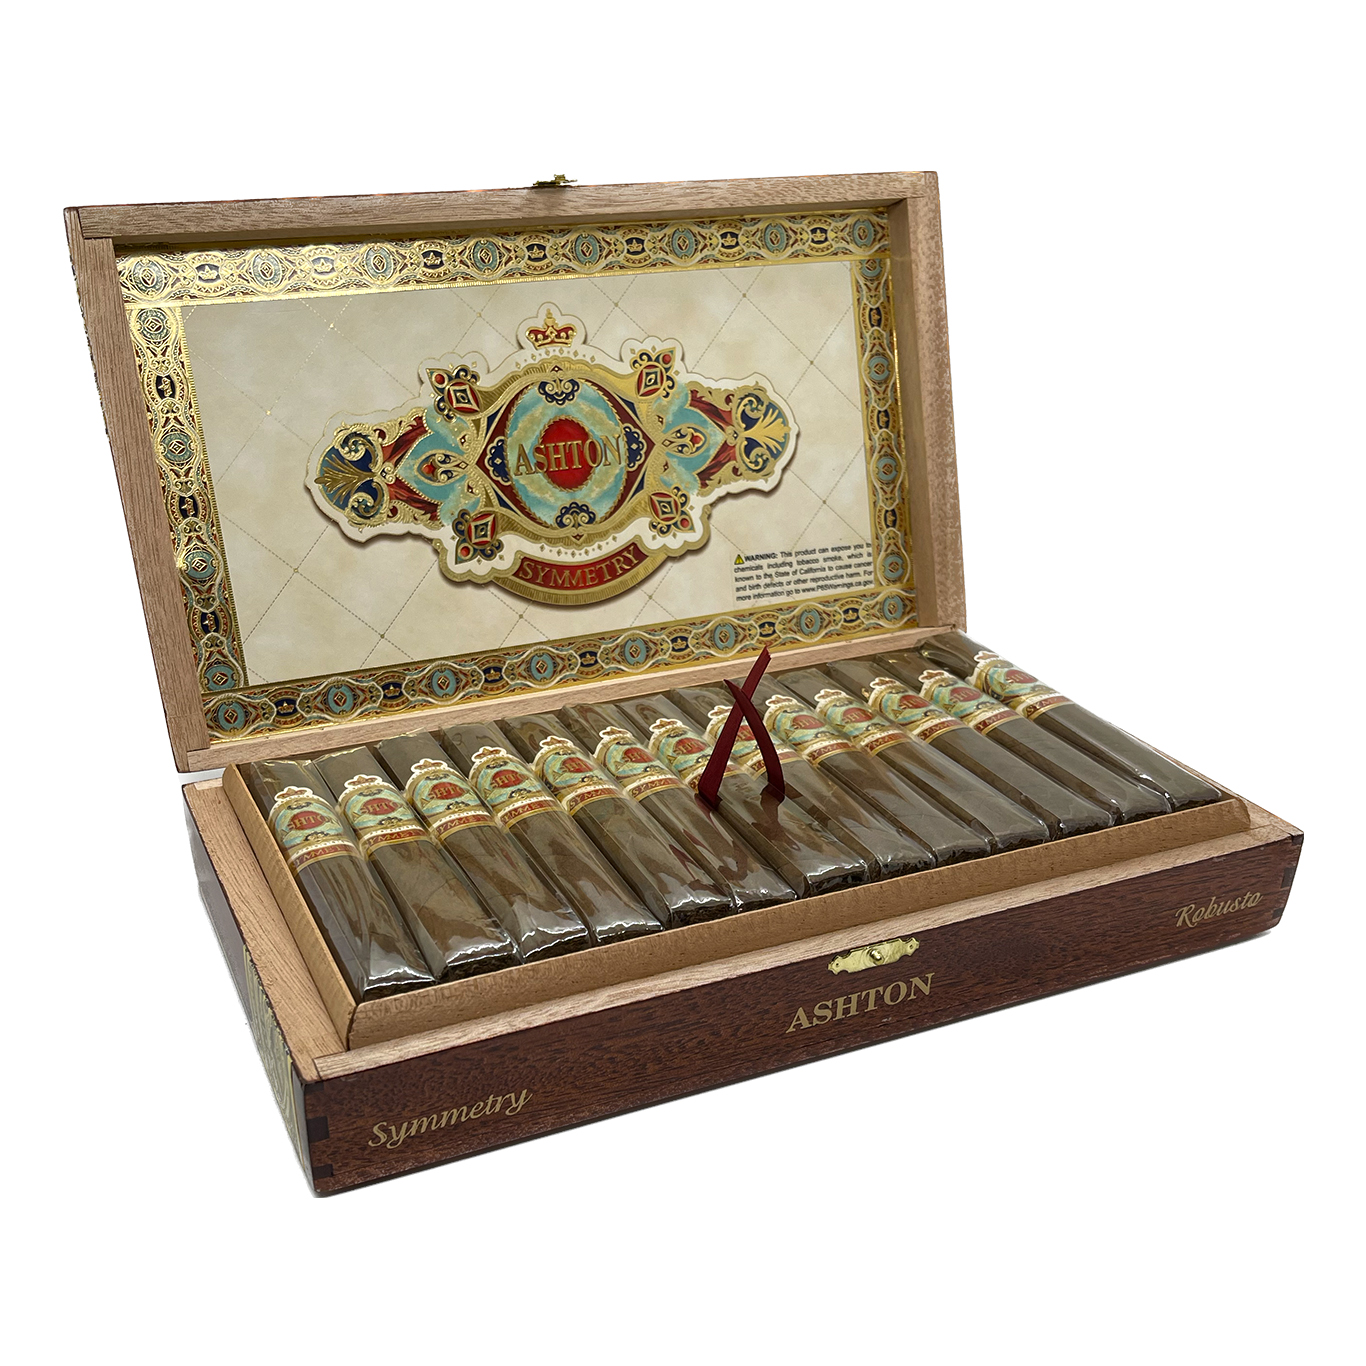 A box of Ashton Symmetry cigars